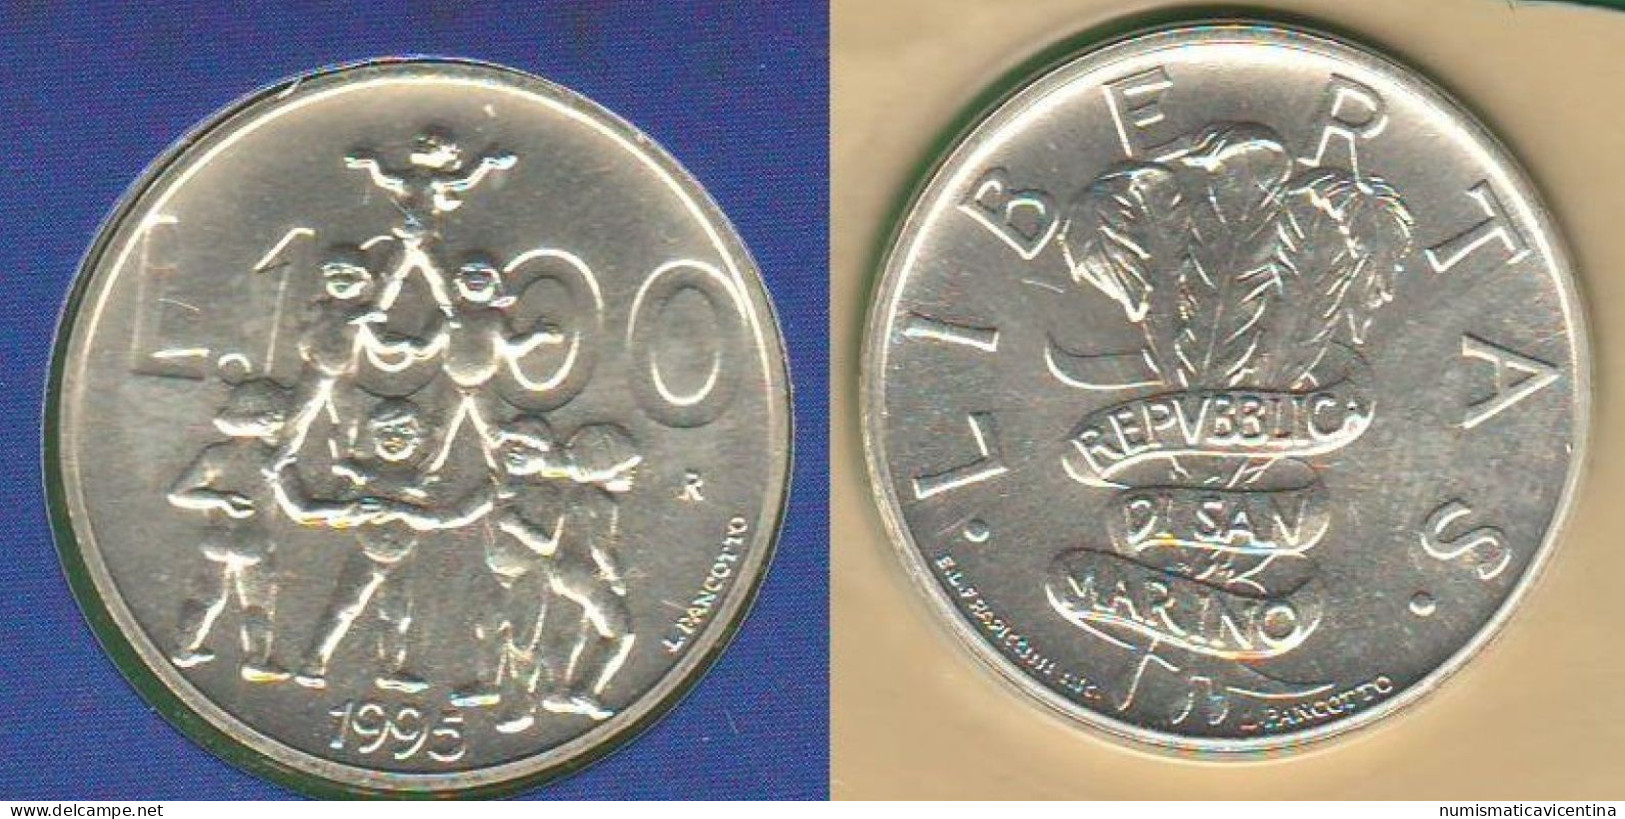 San Marino 1000 Lire 1995 Solidarietà Solidarity Solidarité Saint Marin Silver Coin UNC - Saint-Marin